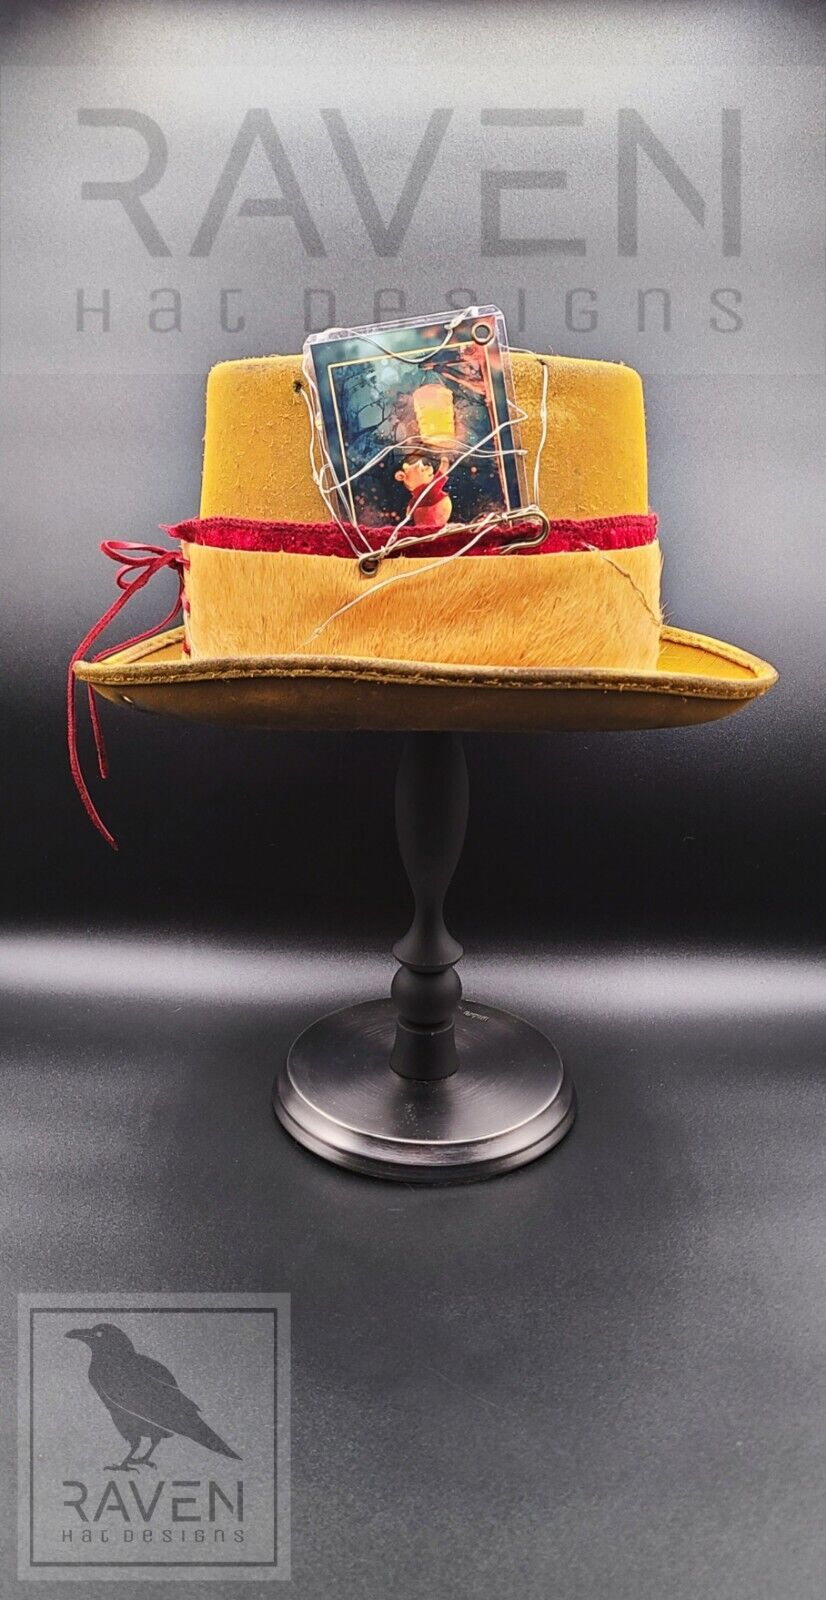 One-of-a-Kind custom Winnie The Pooh Inspired Top Hat #disney #winniethepooh